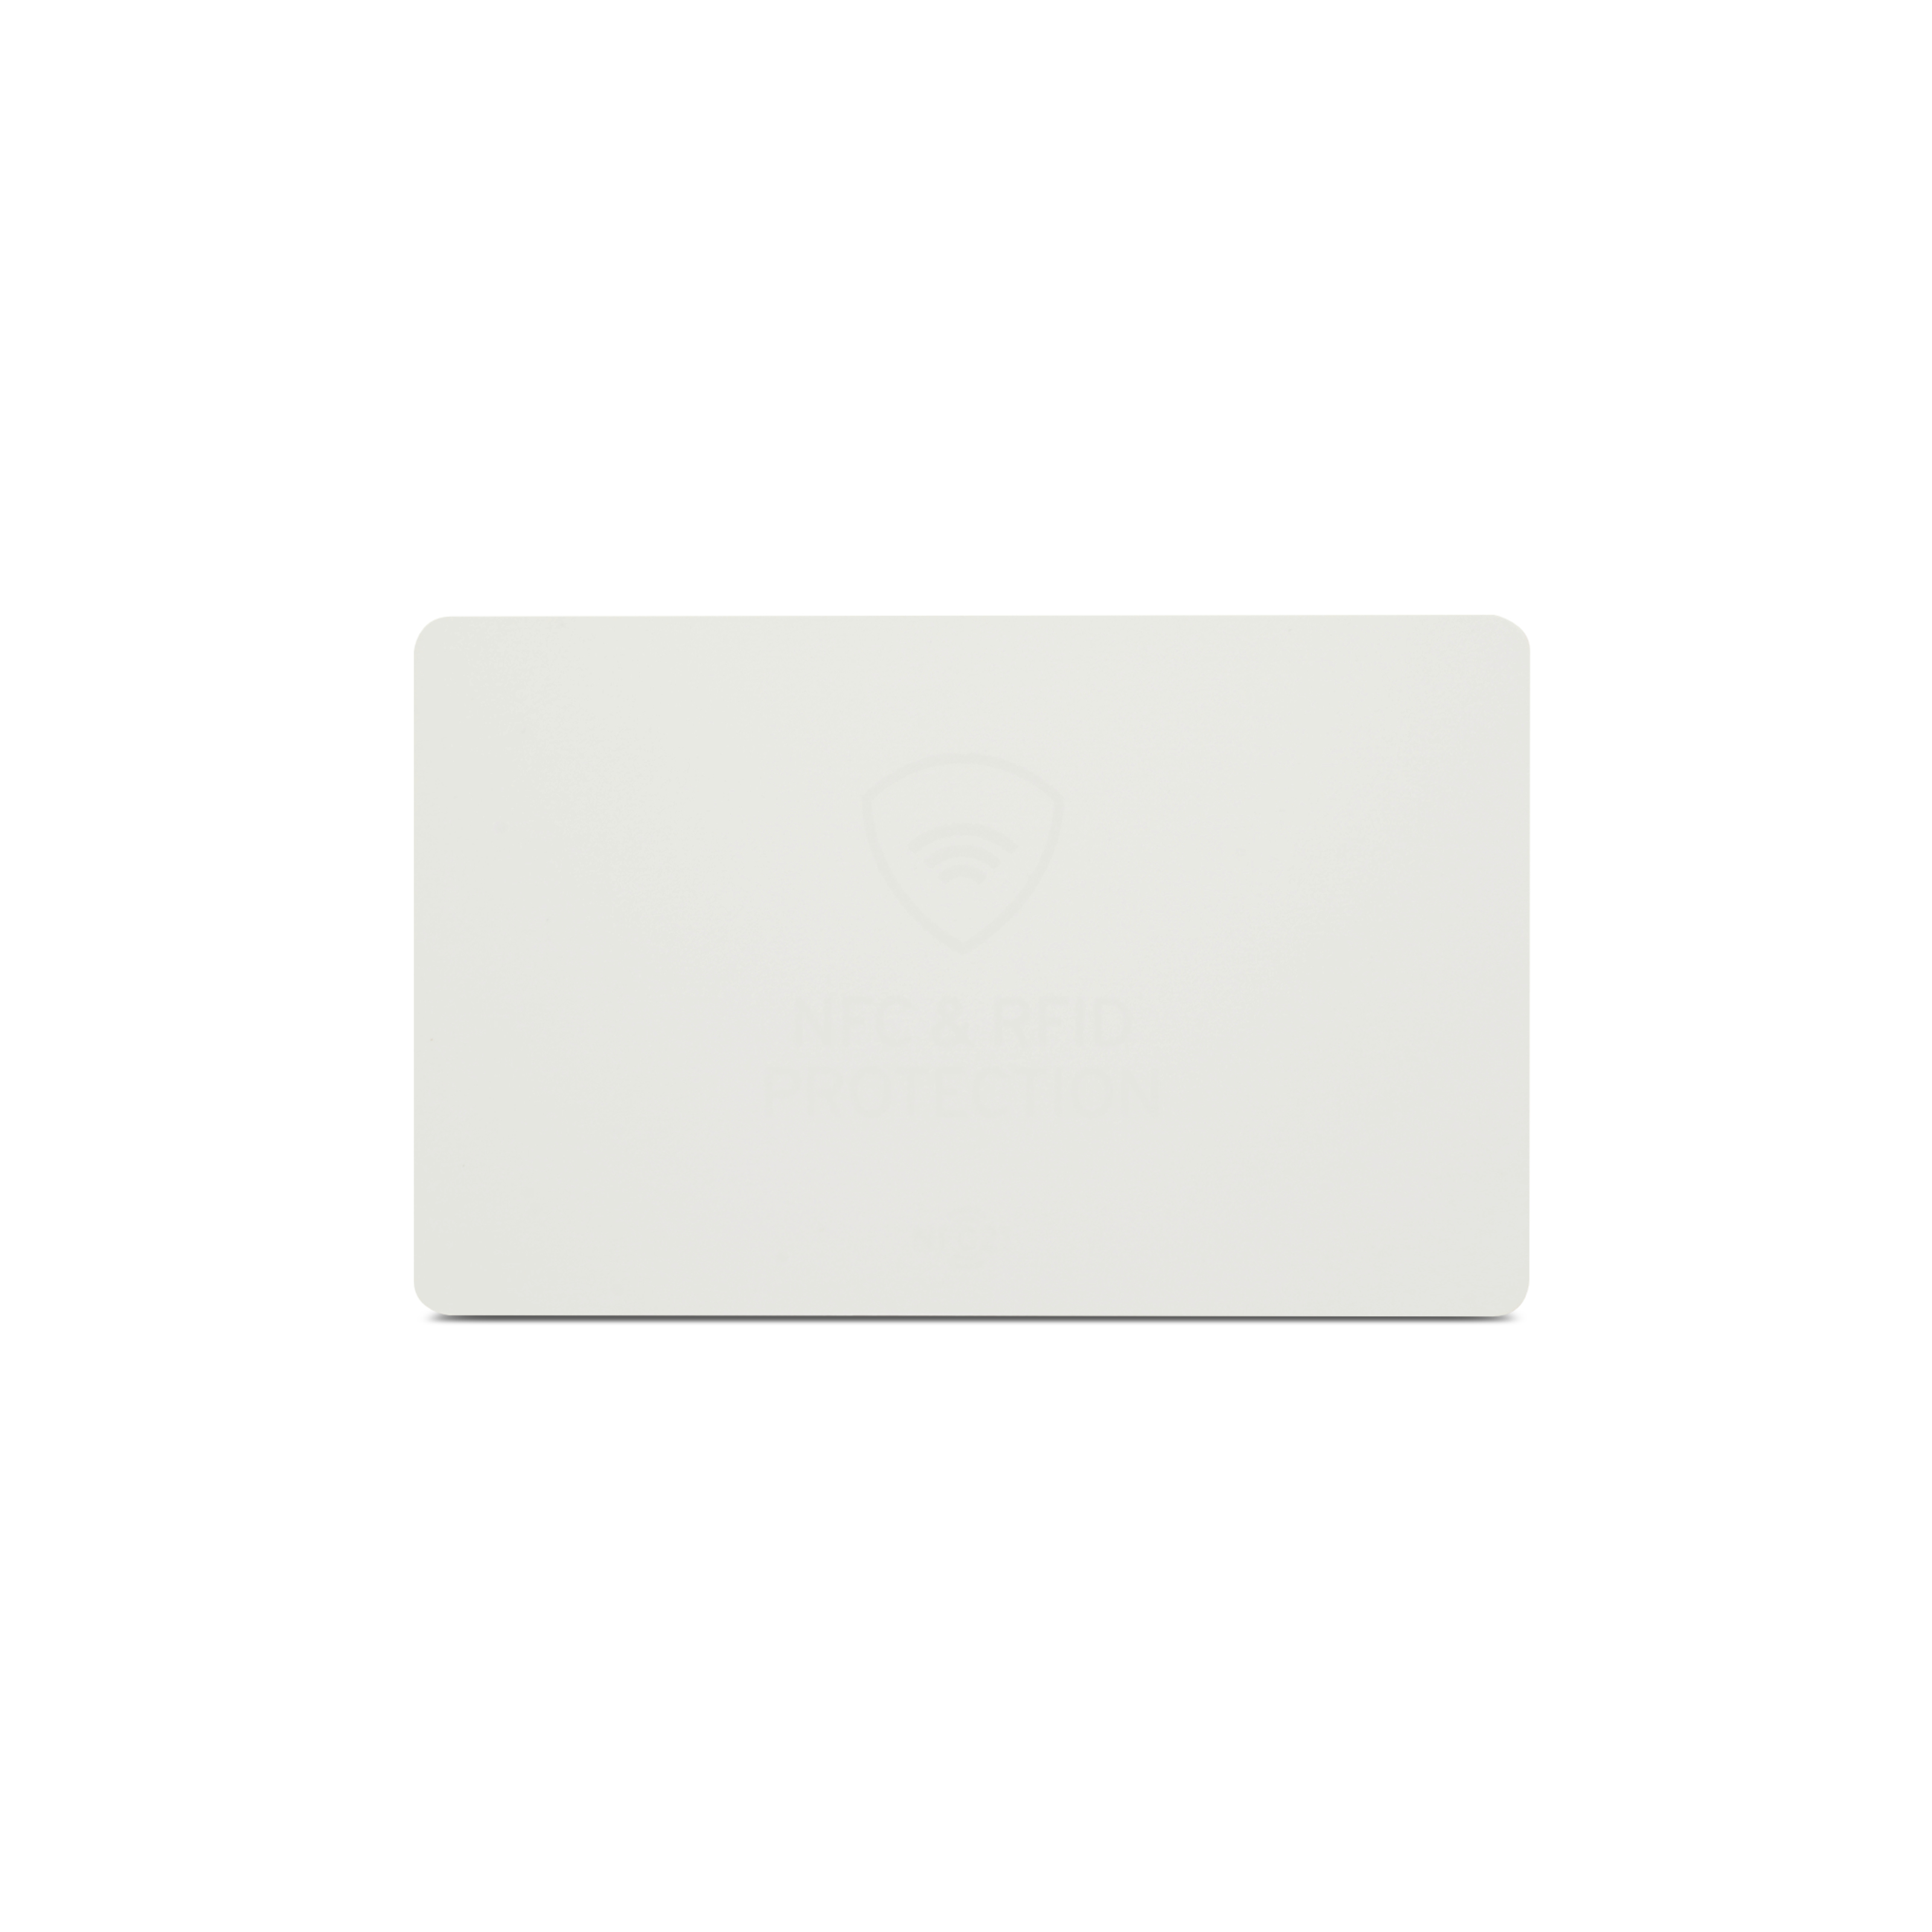 NFC- & RFID-Schutzkarte – 85,6 x 54 mm − matt weiß